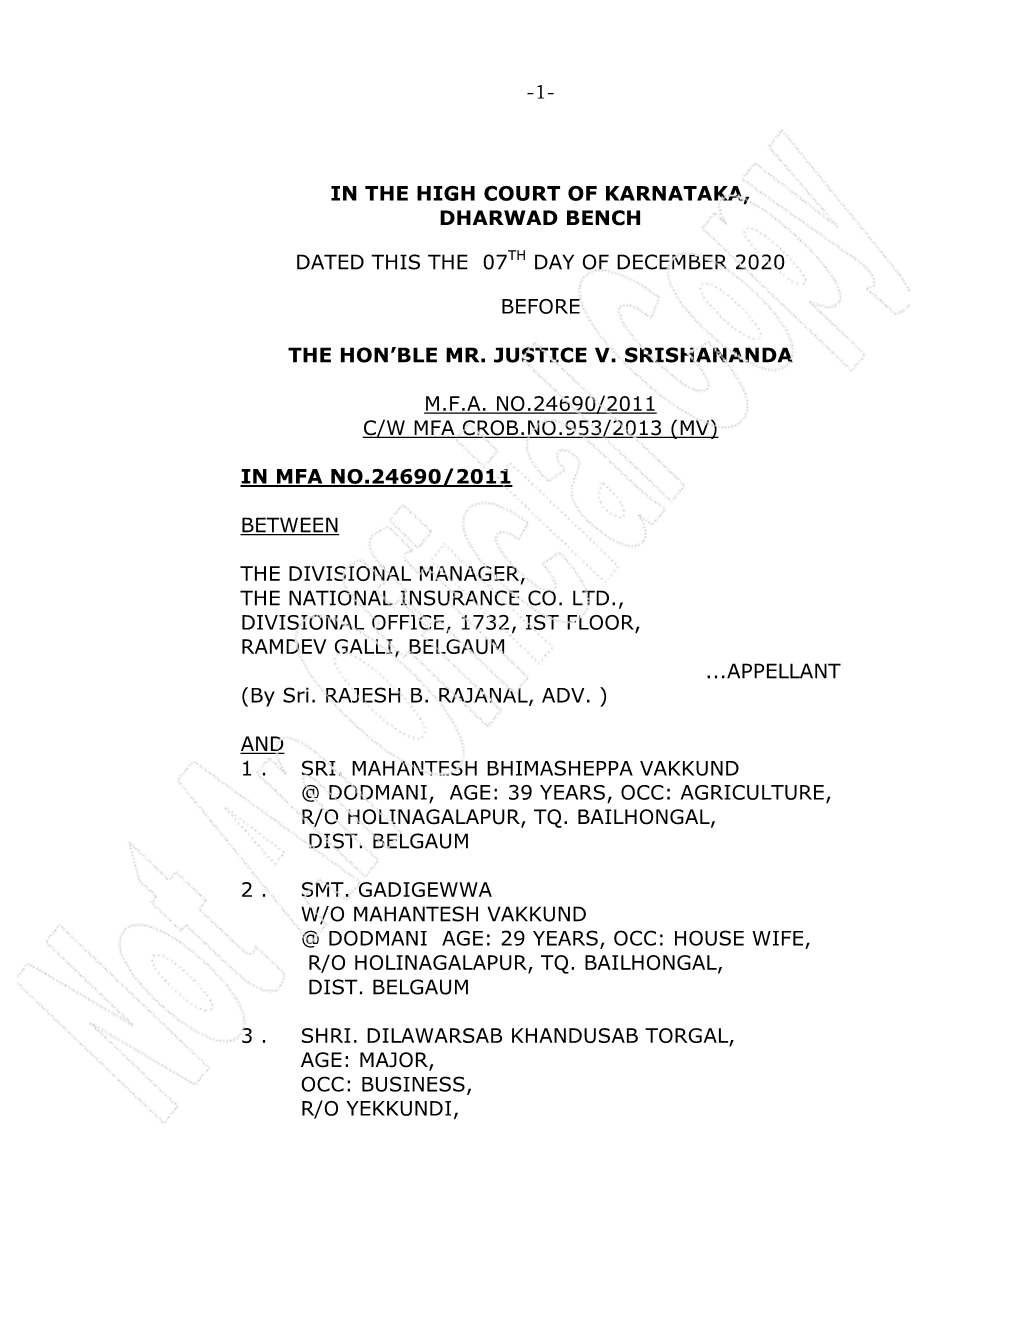 1- in the High Court of Karnataka, Dharwad Bench